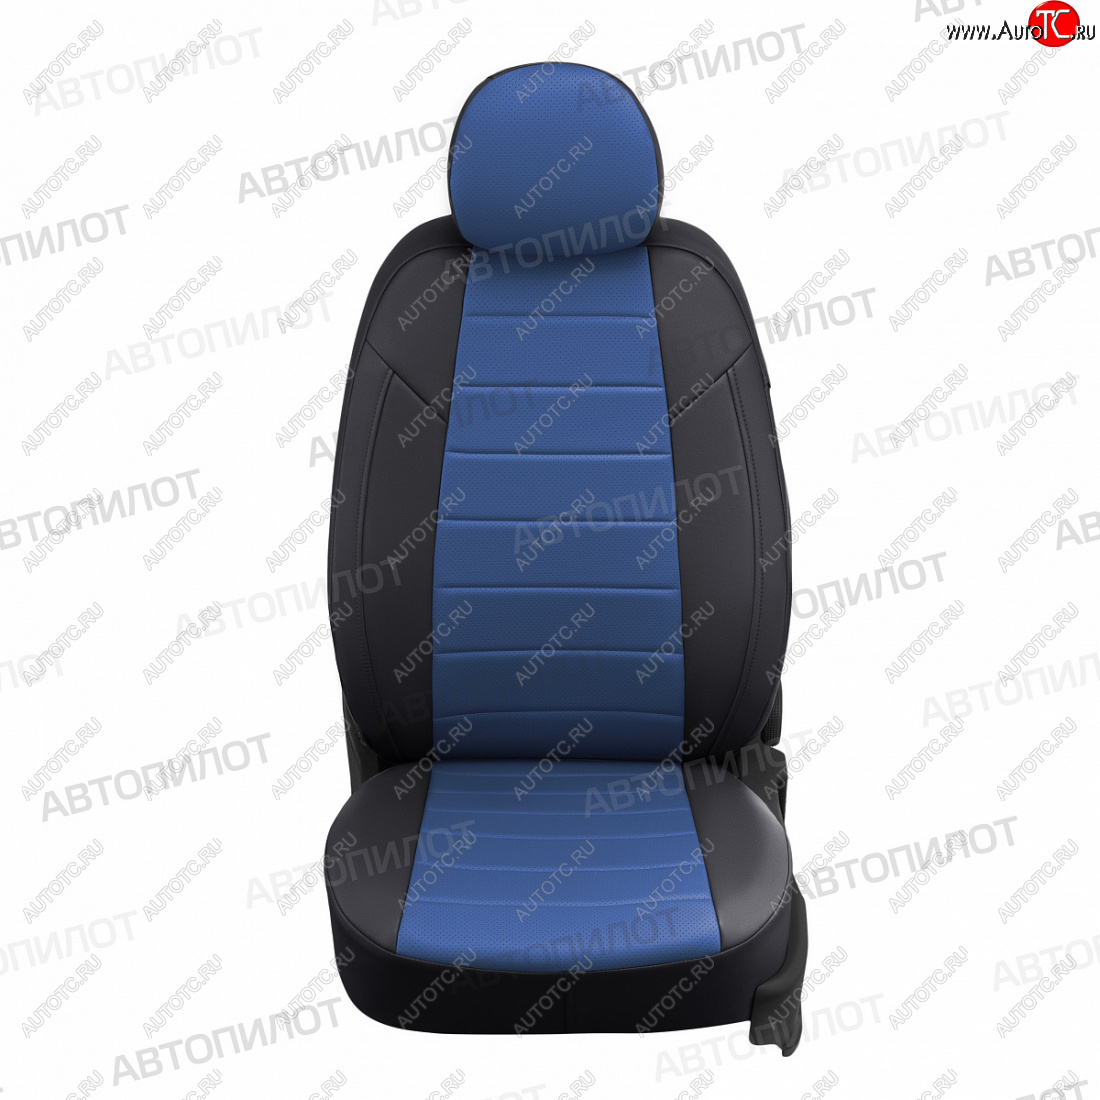 13 449 р. Чехлы сидений (экокожа) Автопилот  Hyundai Sonata  LF (2014-2019), KIA Optima ( 4 JF,  JF) (2015-2020) (черный/синий)